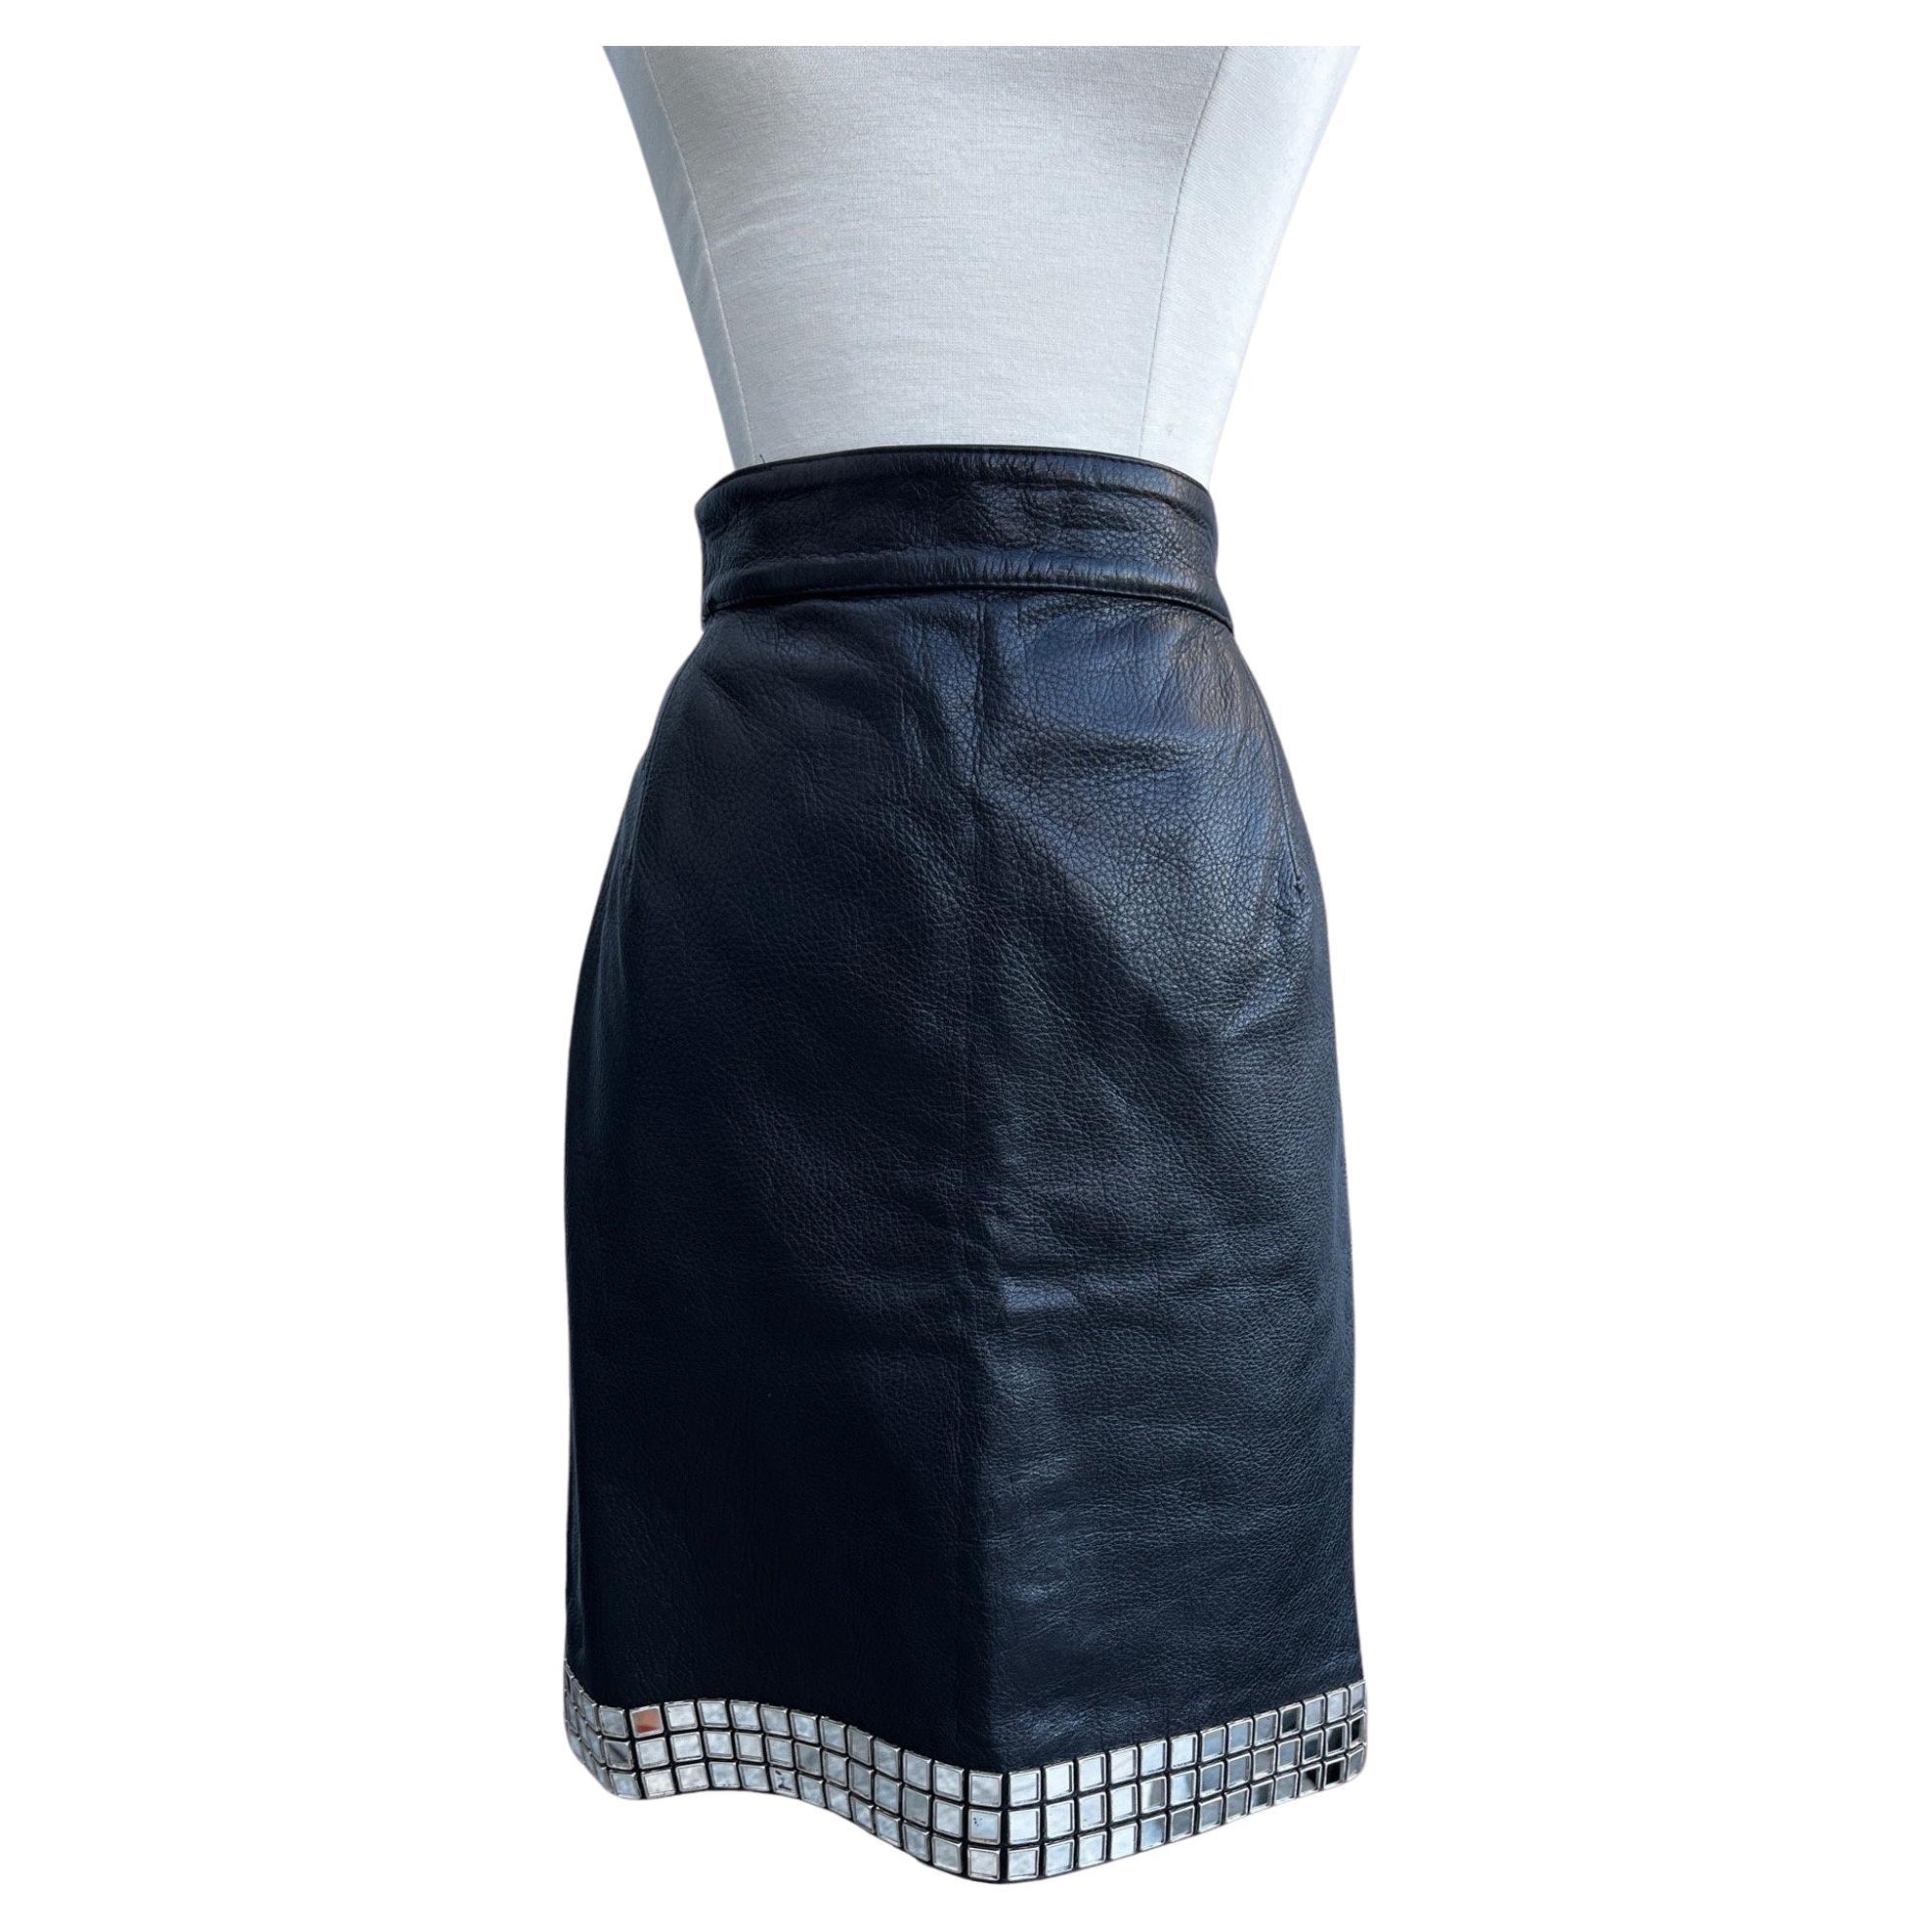 Moschino Black Leather Mirror Skirt, Circa 1990